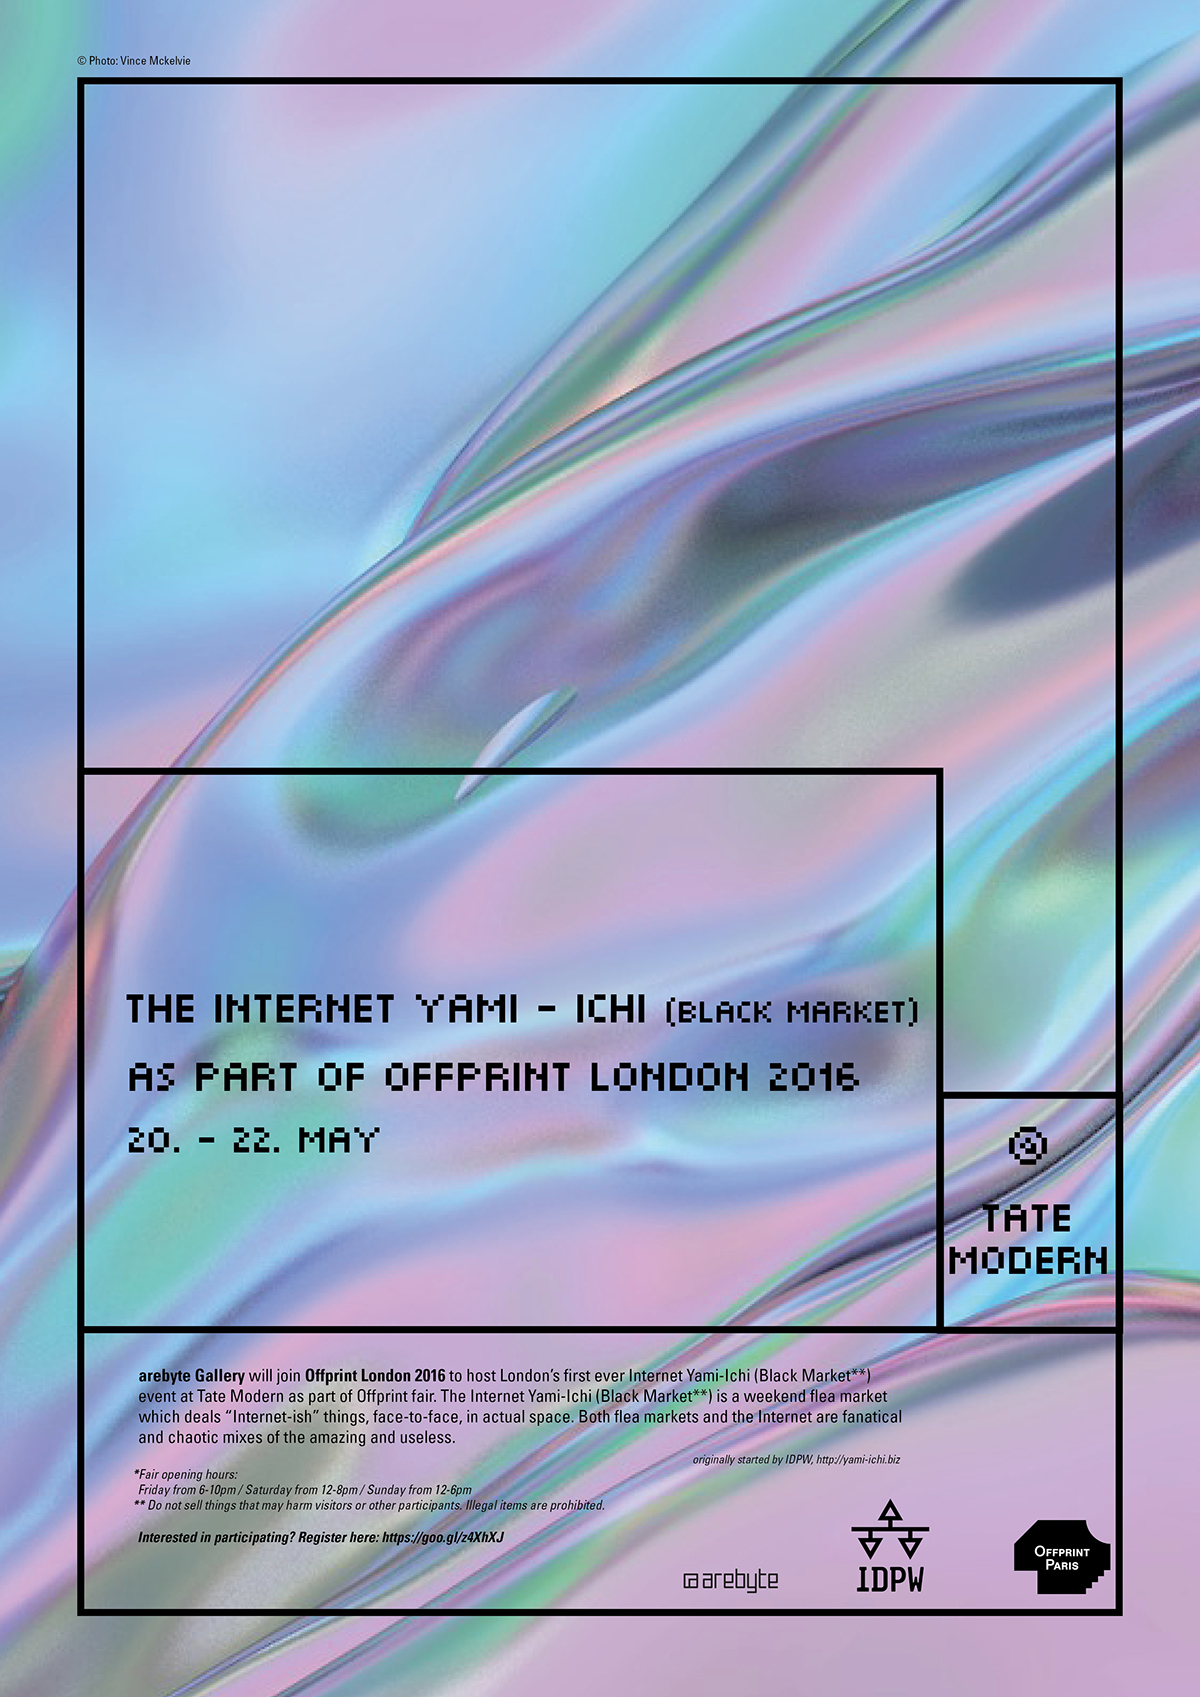 yami - ichi tate modern Offprint London Offprint   arebyte Black Market poster Promotion